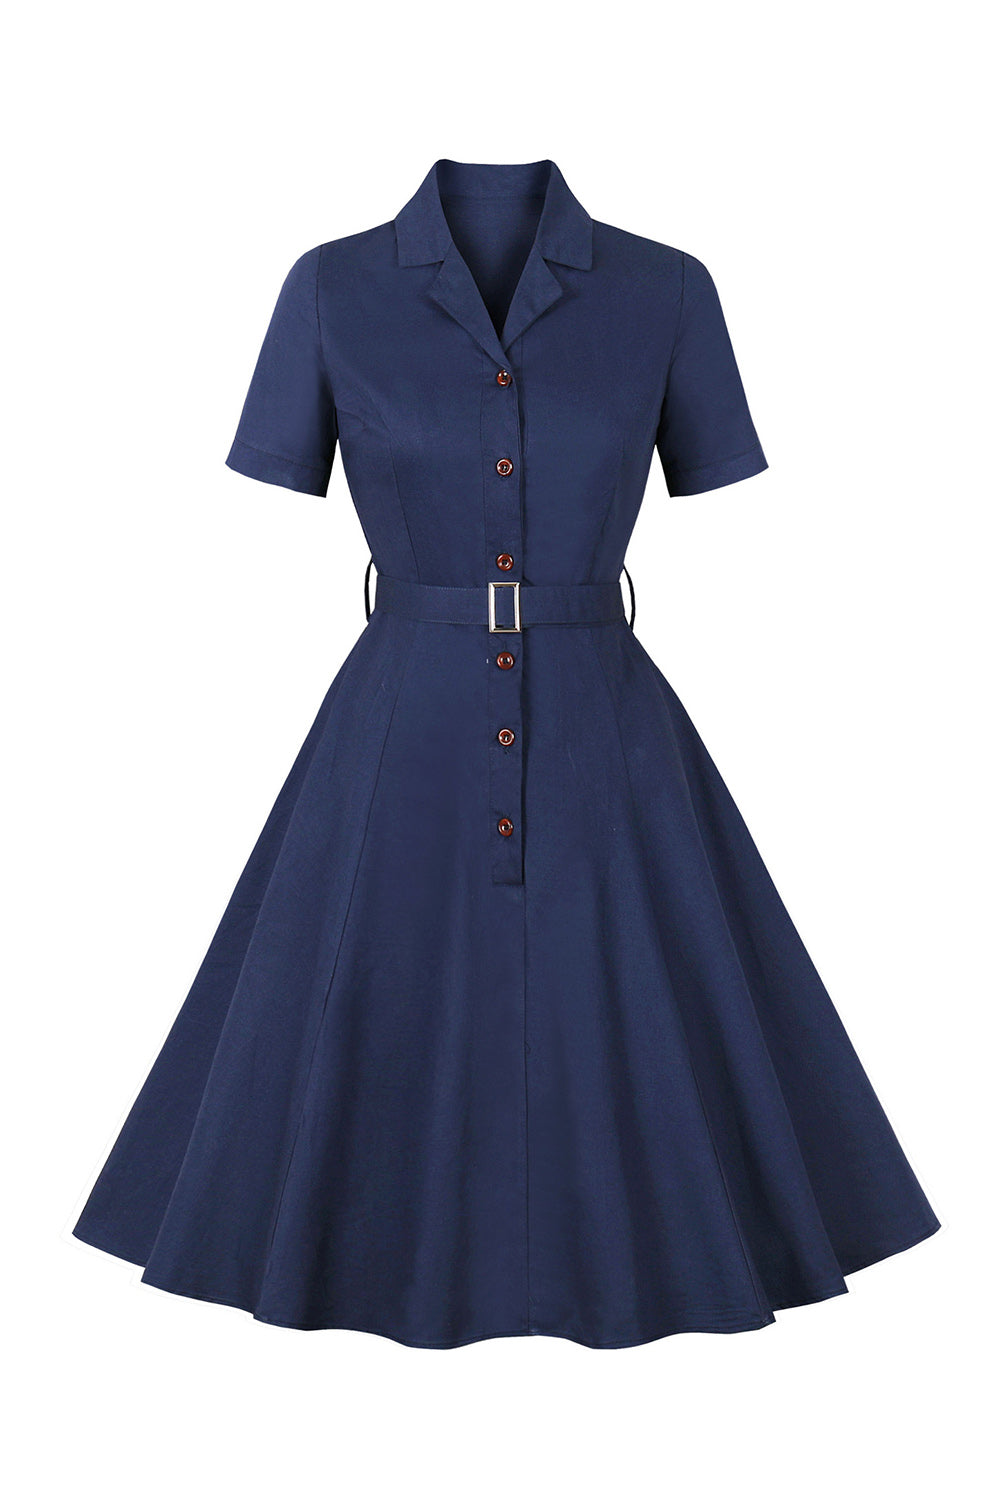 Navy kortermet knapp 1950-tallet kjole